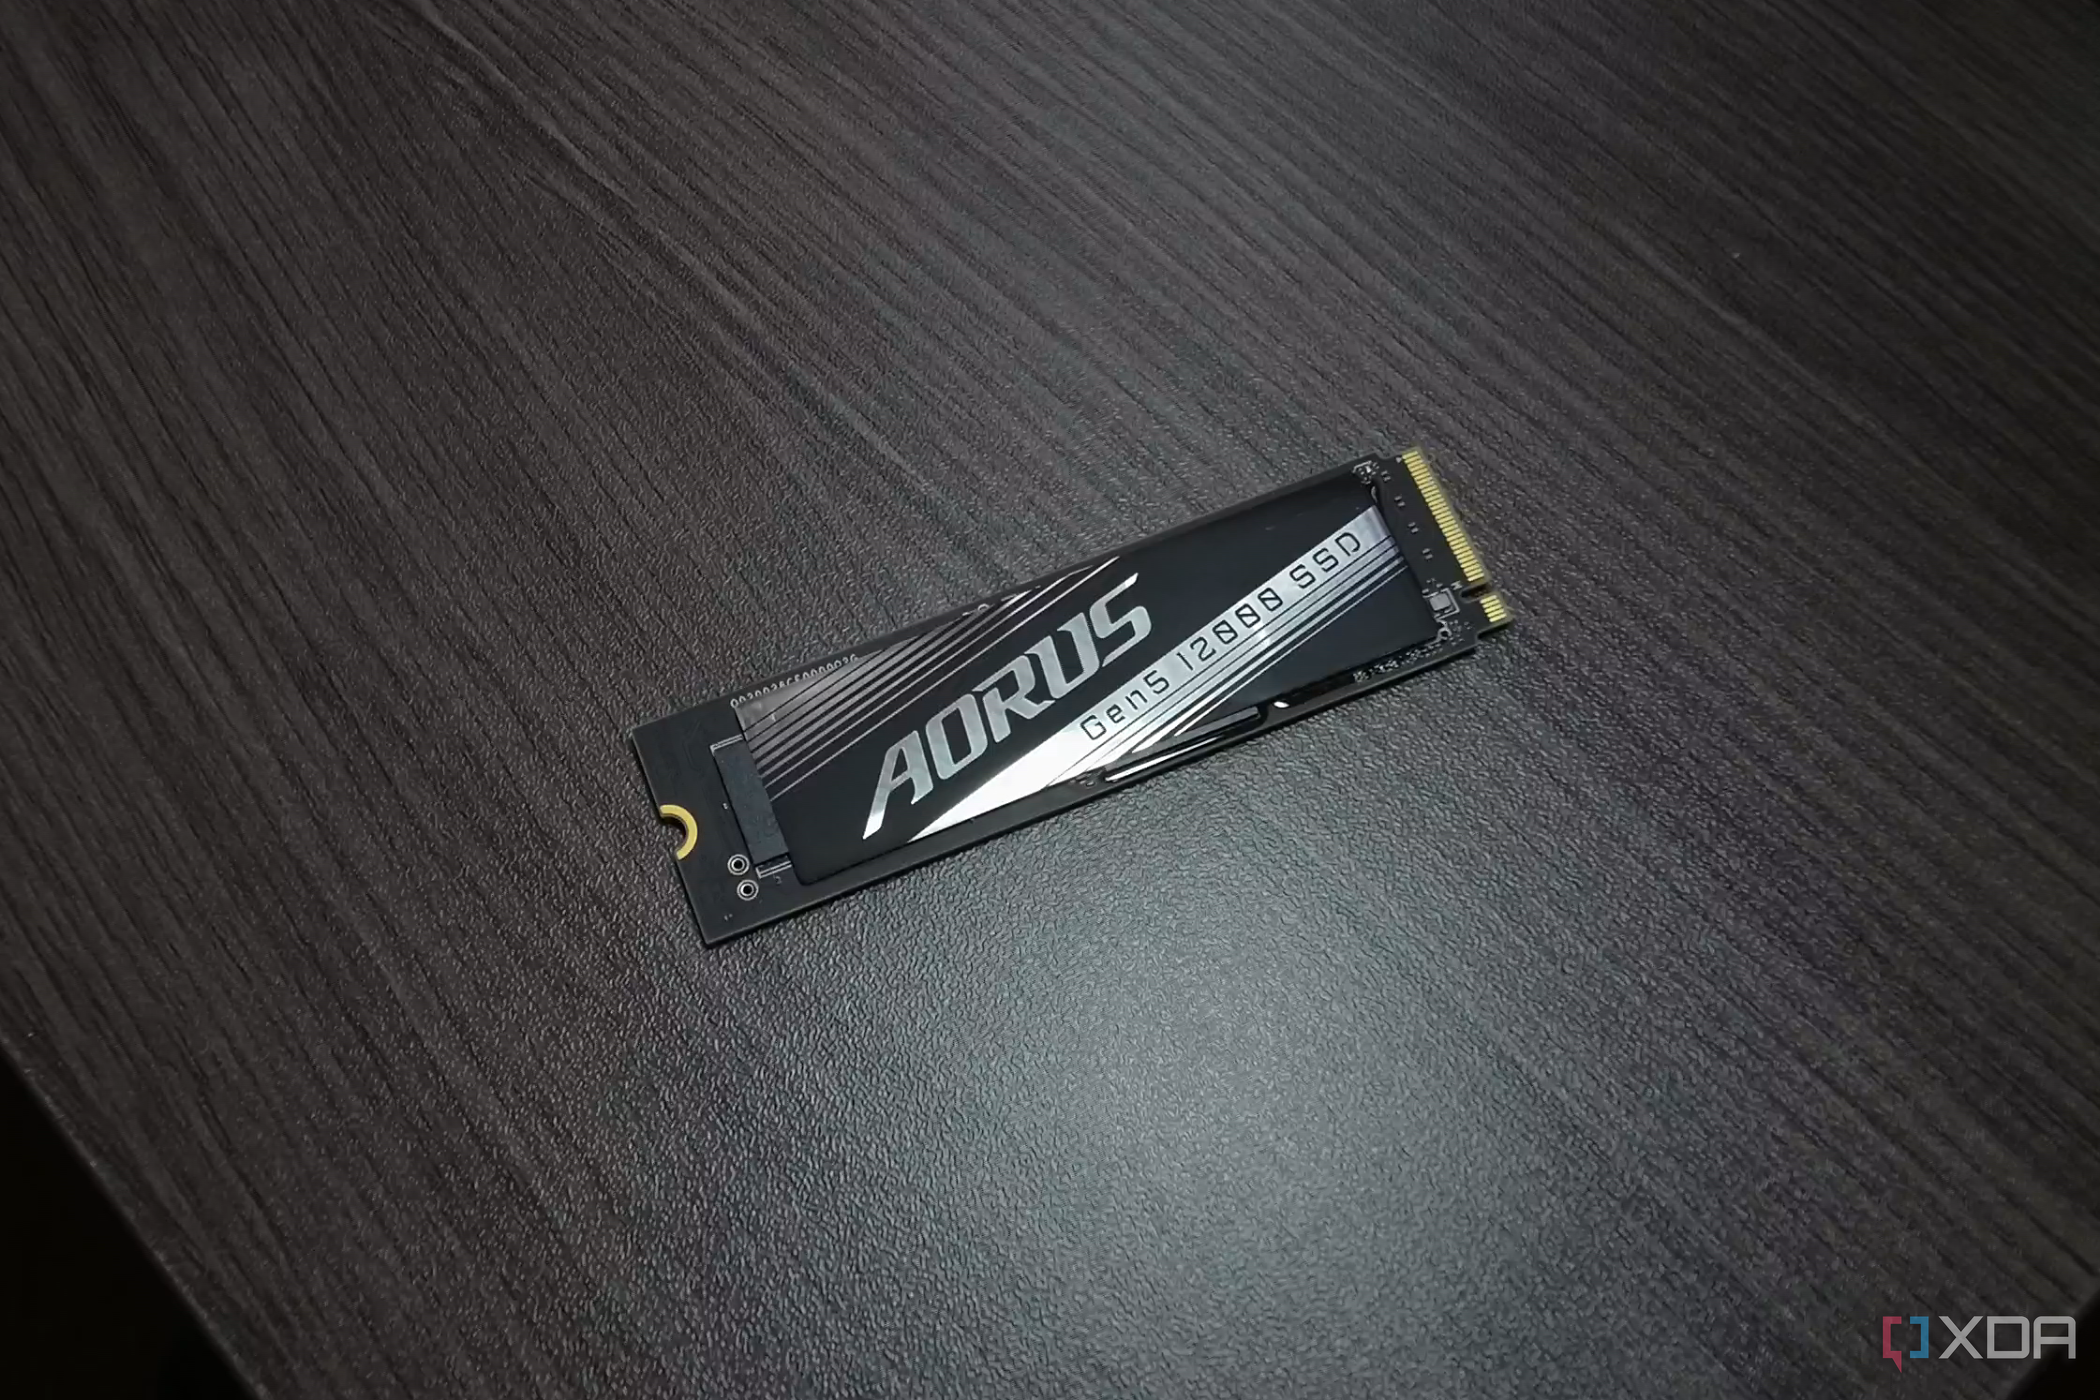 Gigabyte Unveils 12 GB/s Aorus Gen5 12000 SSD